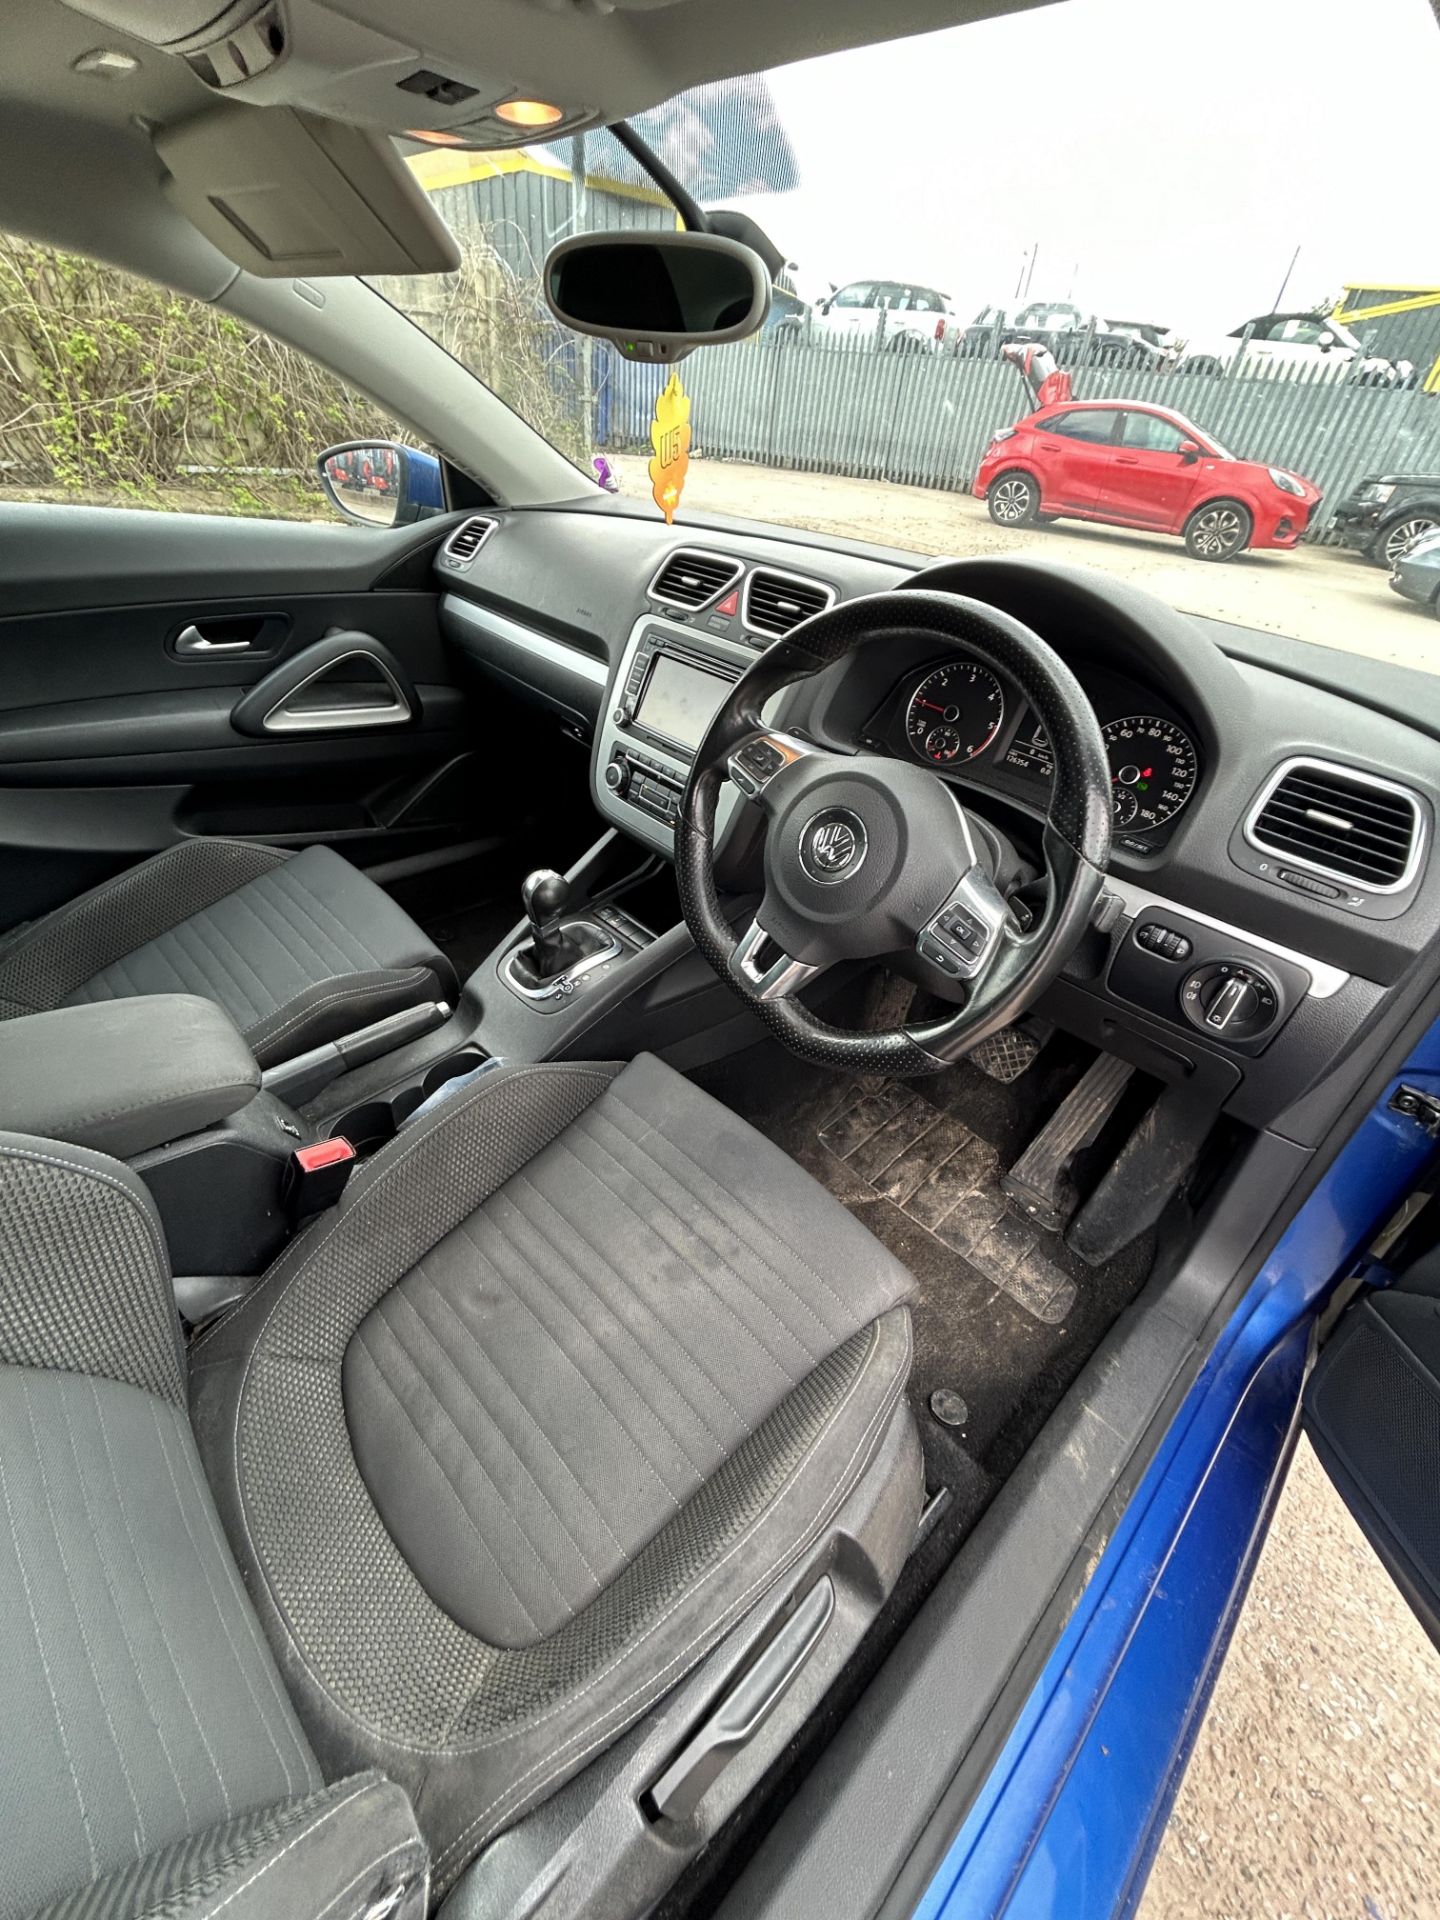 Volkswagen Scirroco GT TDI 170 Diesel Coupe | NA10 VDJ | 126,354 Miles - Image 11 of 13